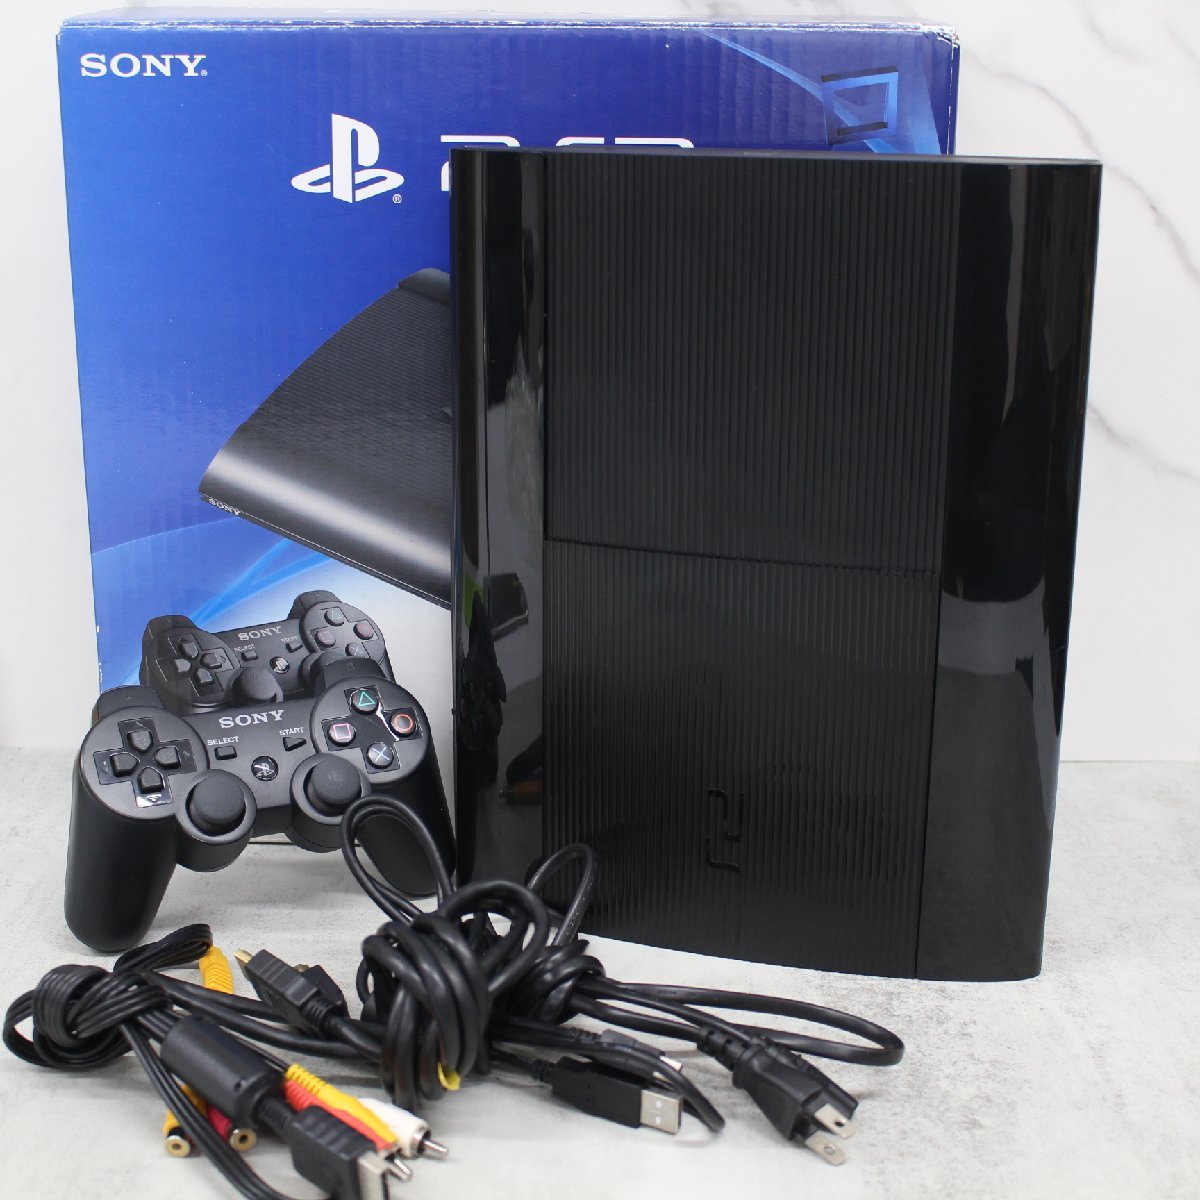 S089)【動作確認済み】SONY PlayStation3 CECH-4300C 500GB チャコールブラック PS3 プレイステーション3 ゲーム機